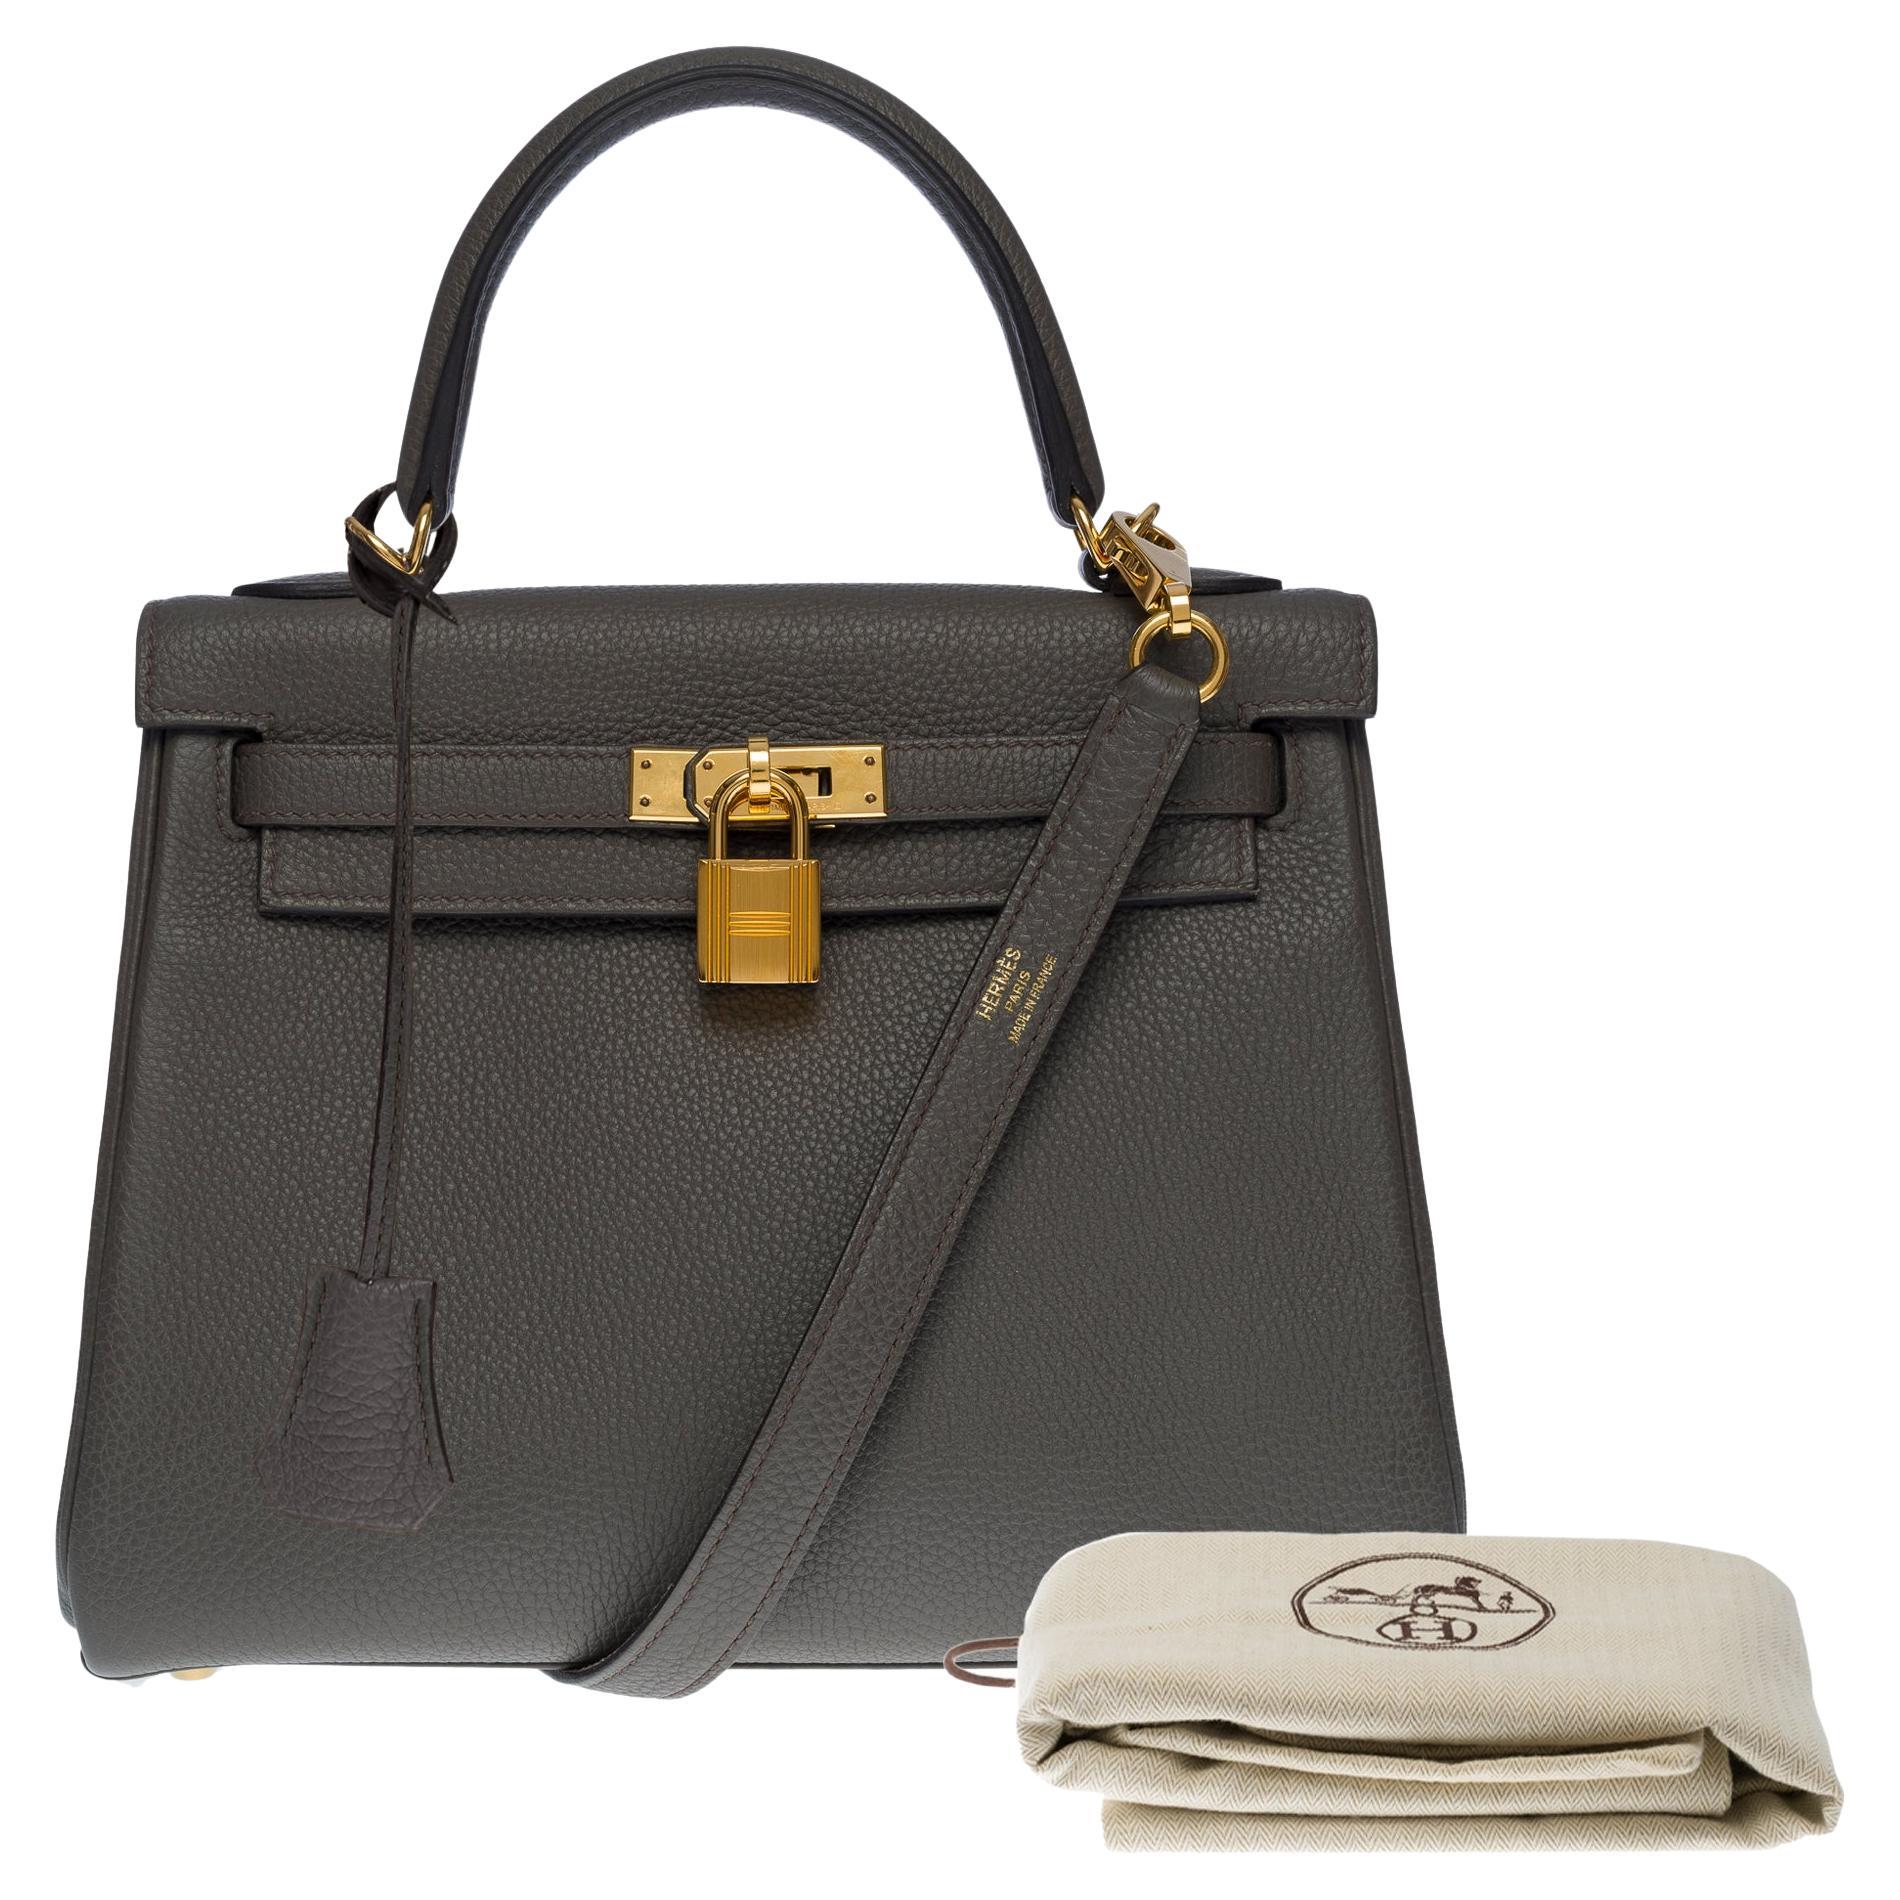 Amazing & Rare Hermès Kelly 25 handbag strap in Grey Togo etain leather, GHW